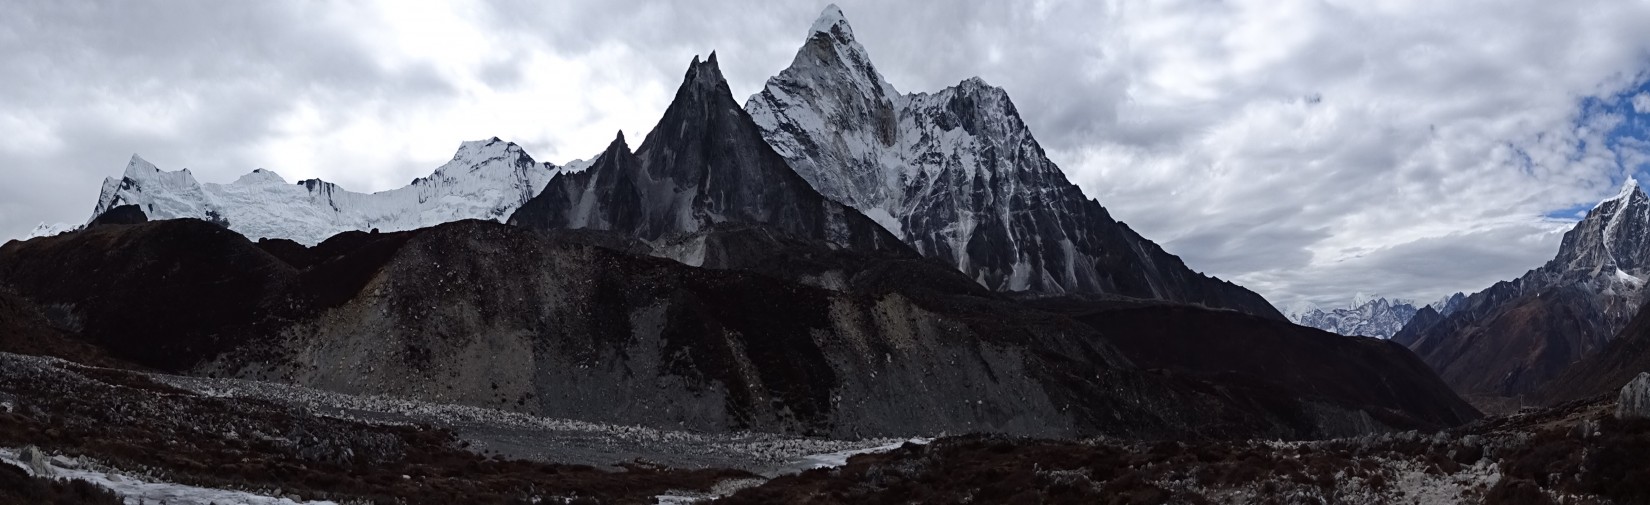 stunning mount amadablam view from kongmala pass everest base camp trek in nepal 